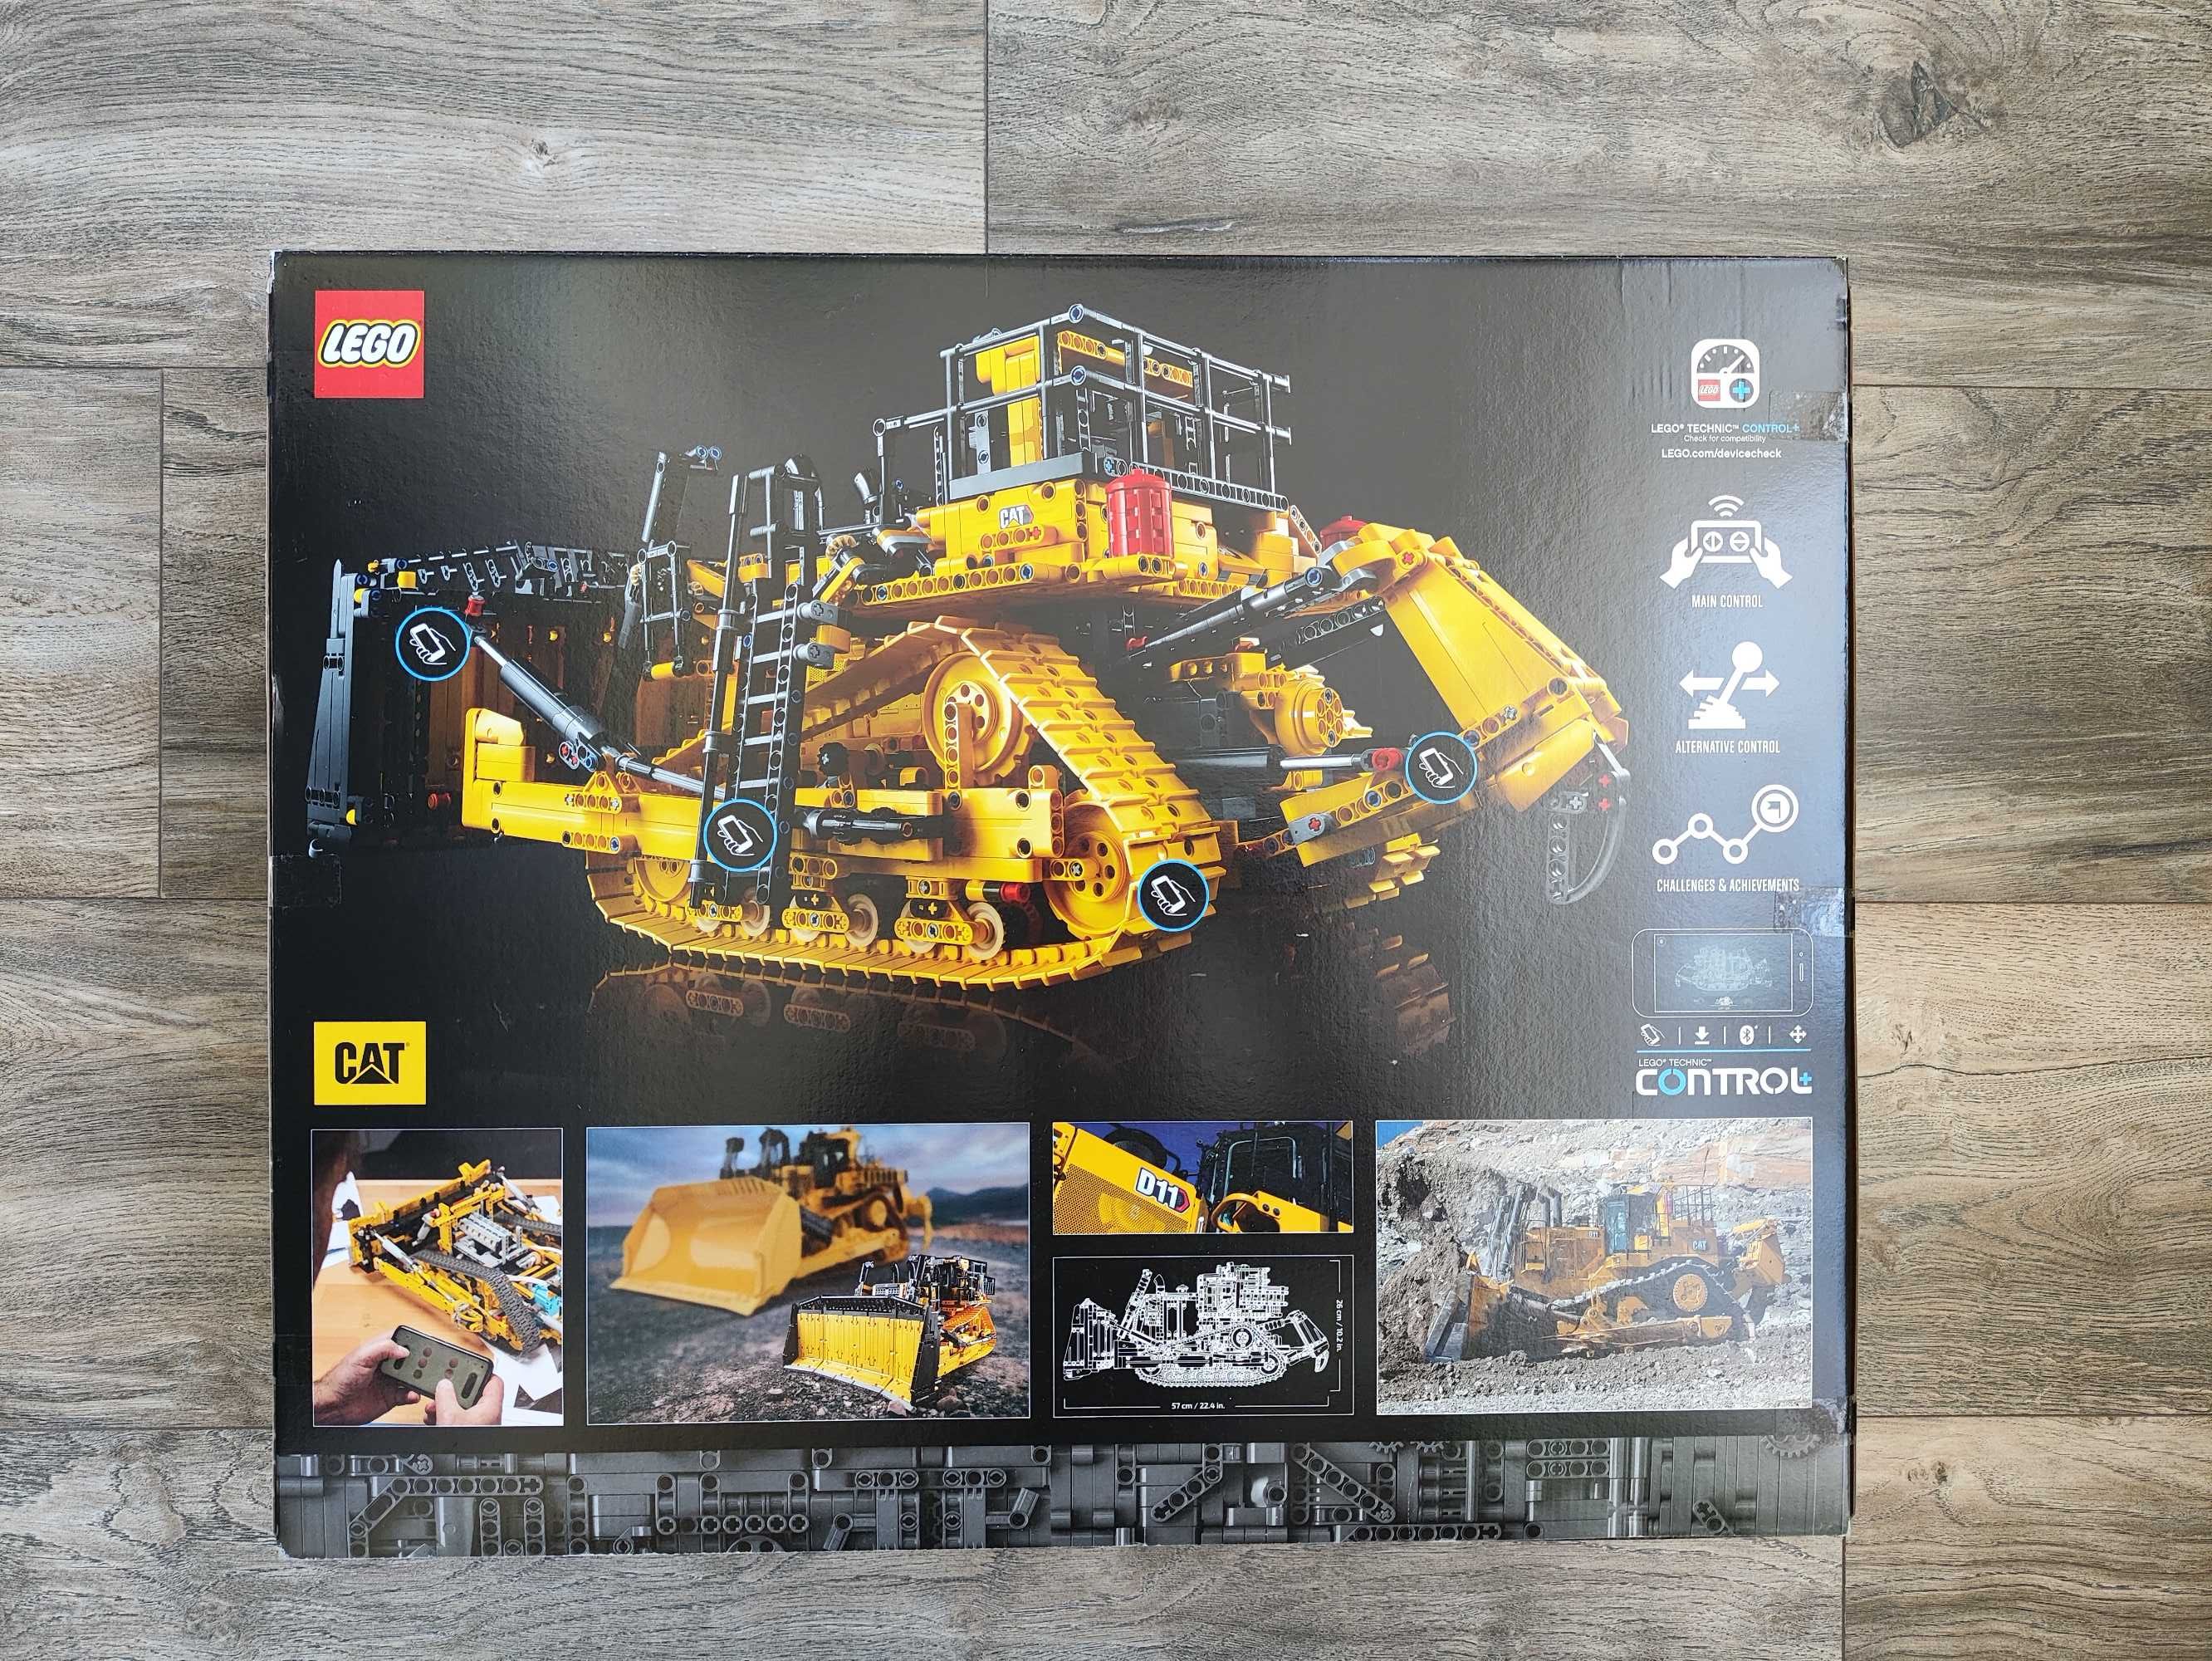 Lego (Лего) Technic 42131 Бульдозер Cat D11